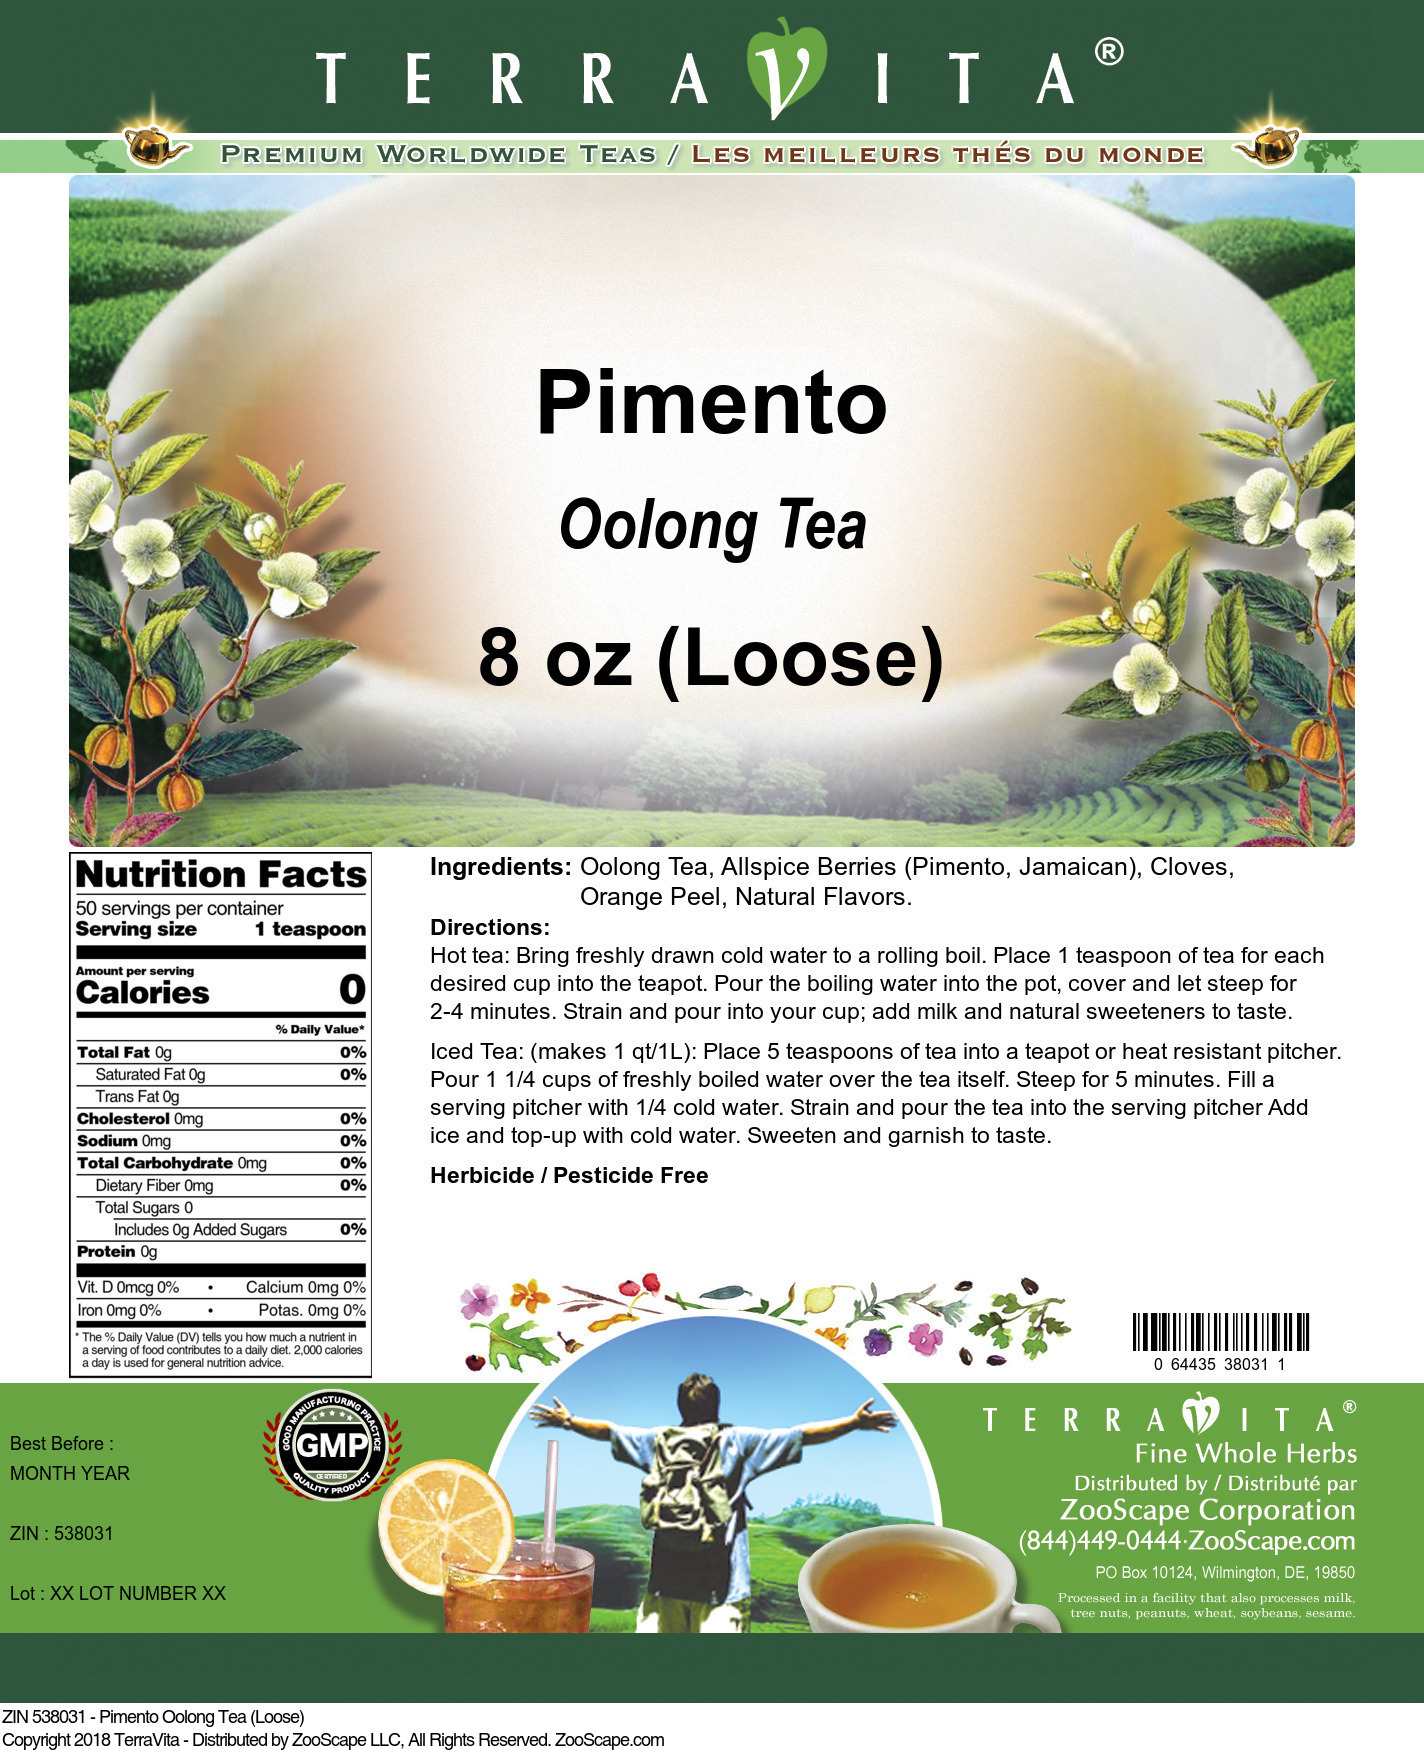 Pimento Oolong Tea (Loose) - Label